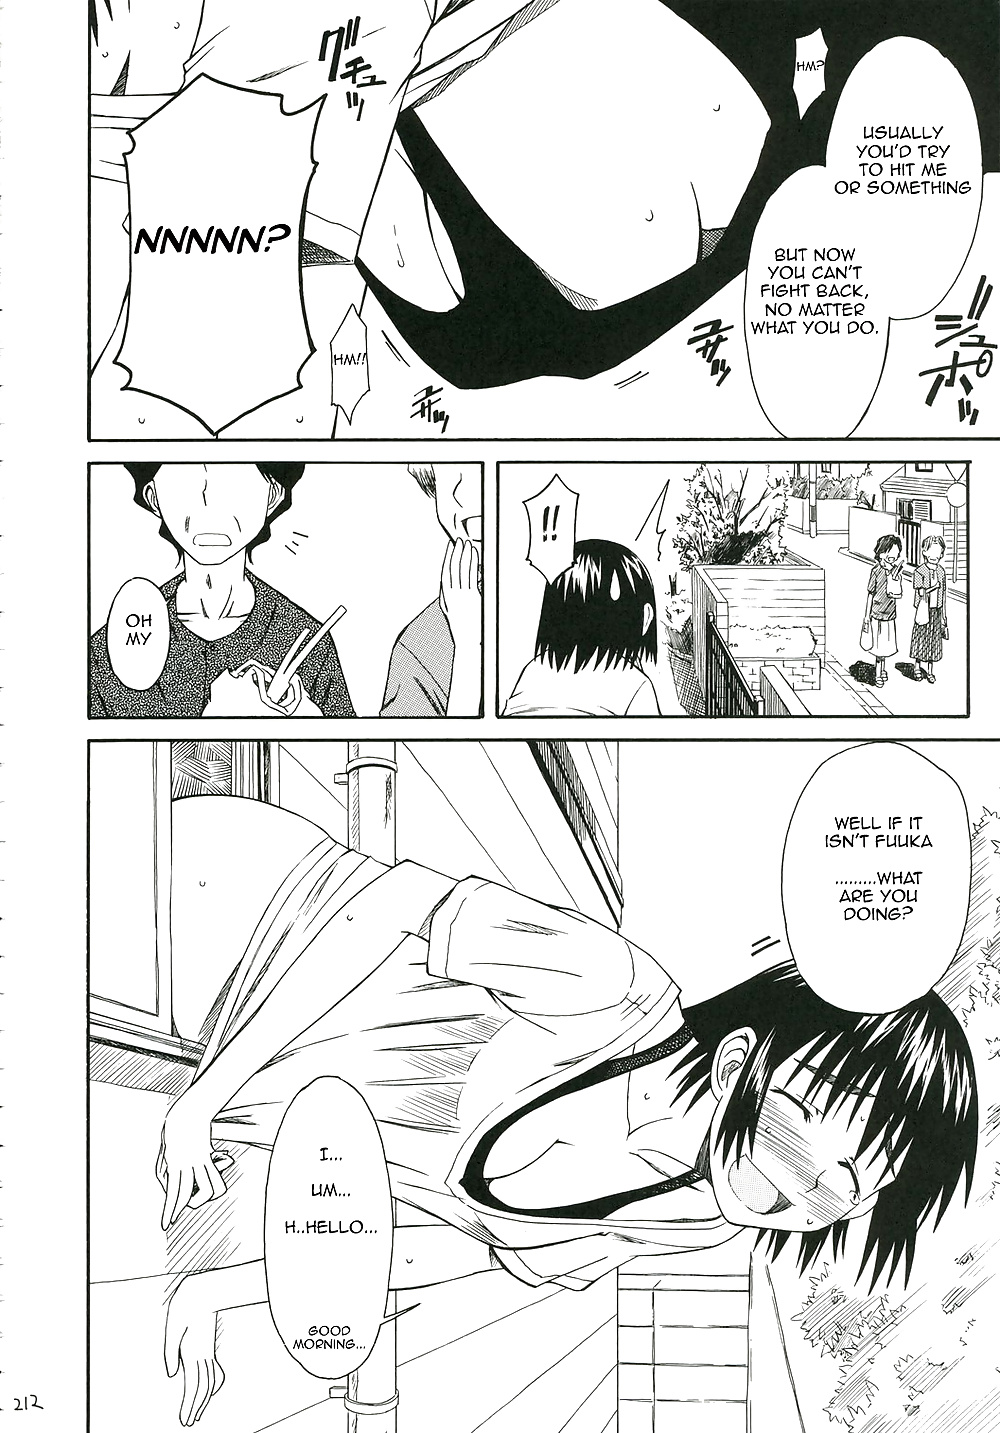 (Manga) Window girl #28805807